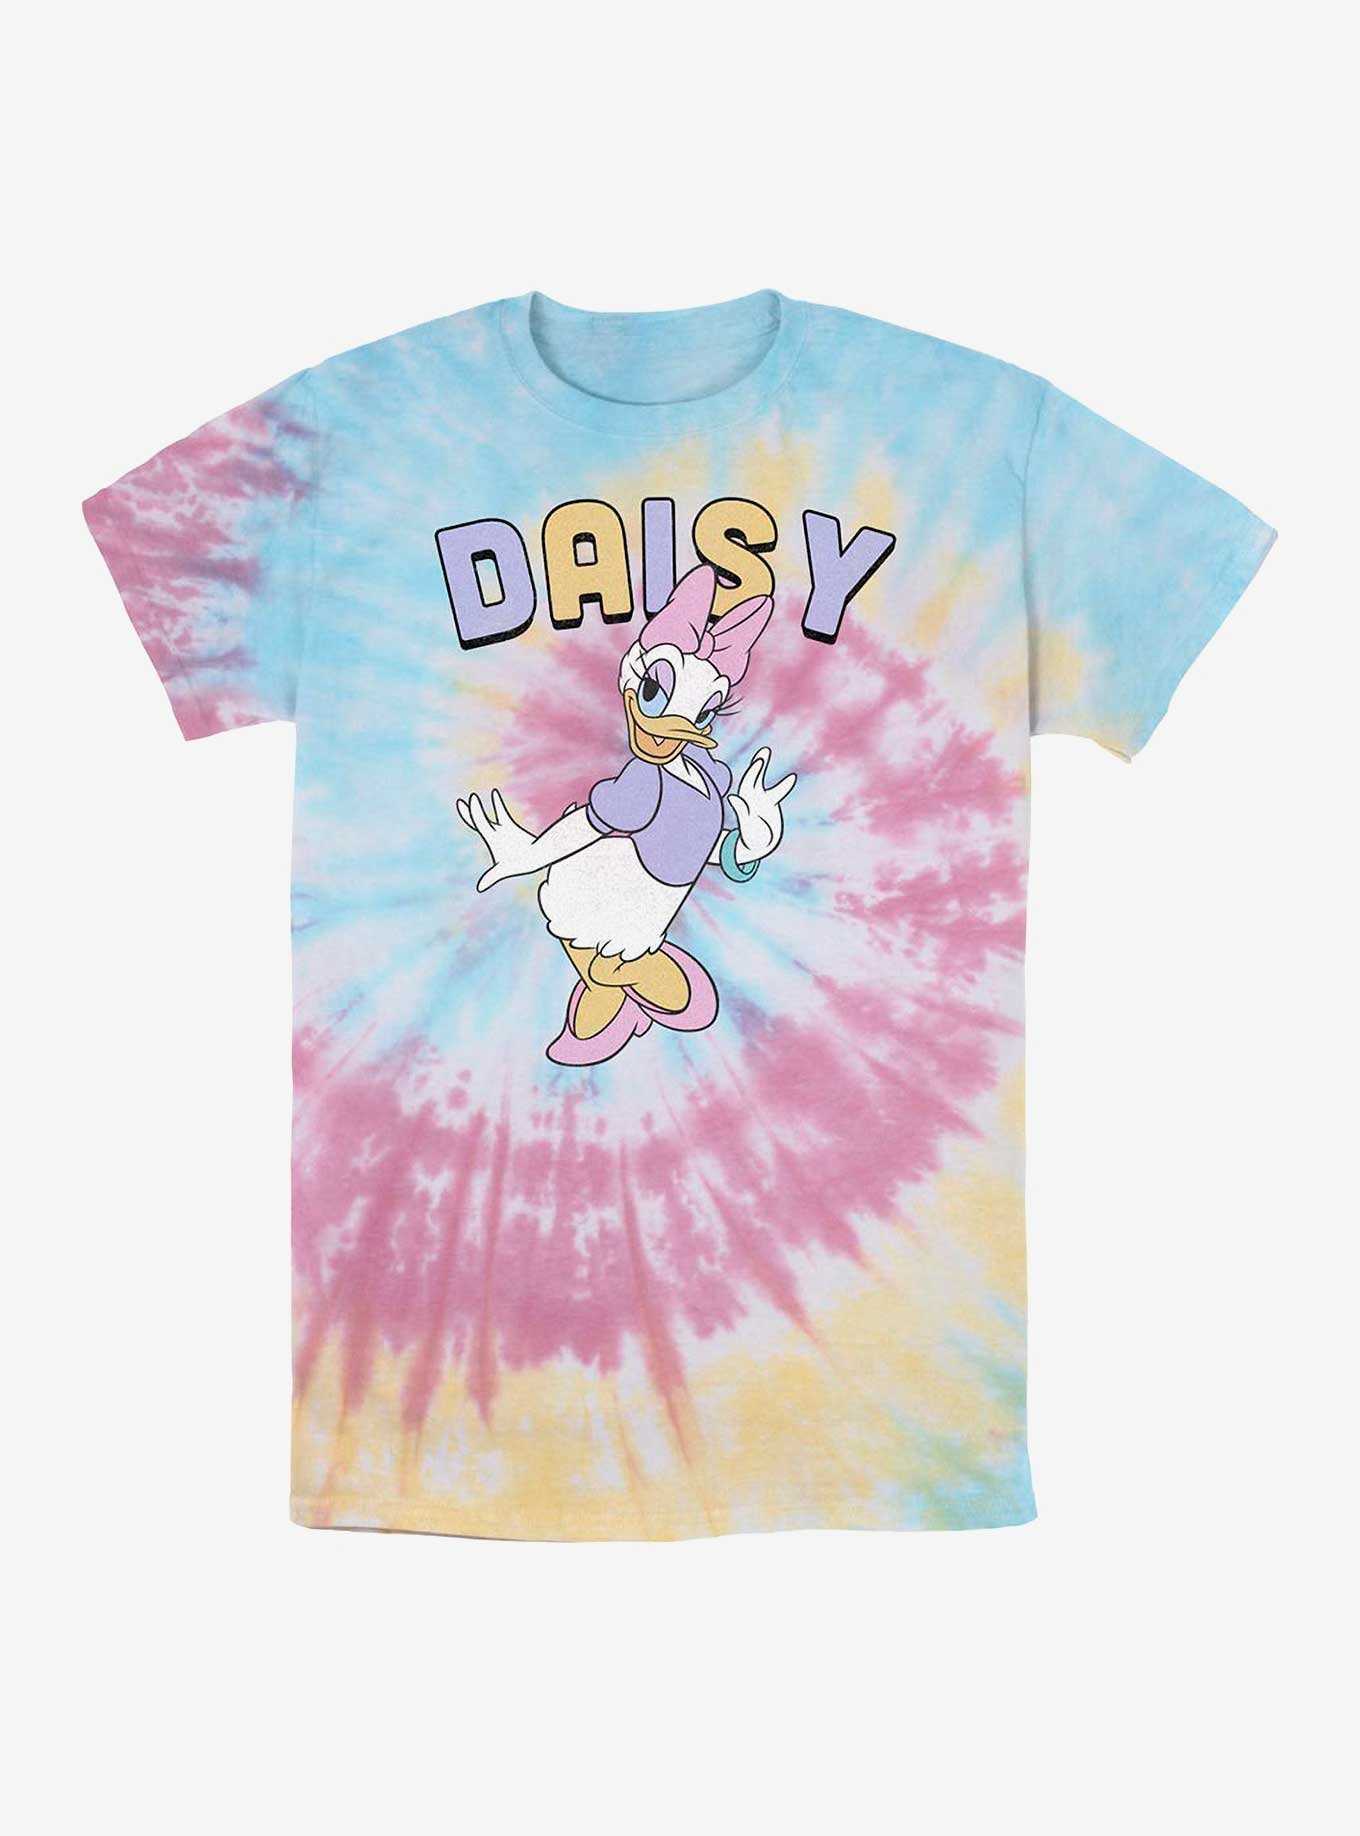 Disney Daisy Duck Daisy Tie Dye T-Shirt, , hi-res